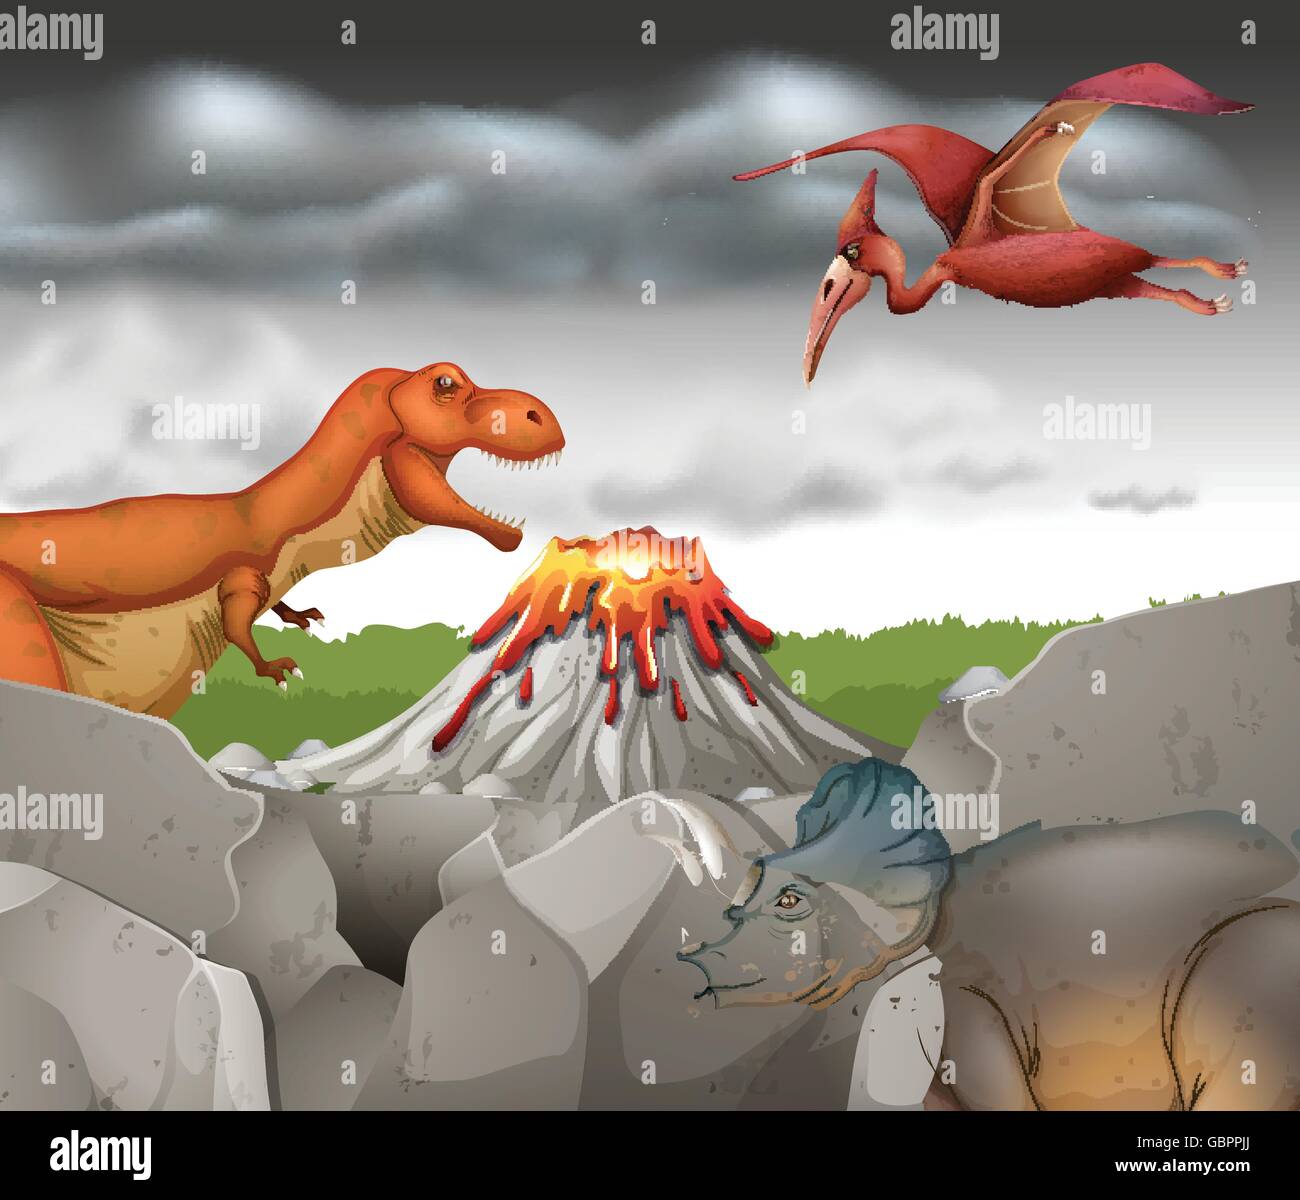 Dinosaurs living on the mountain illustration Stock Vector